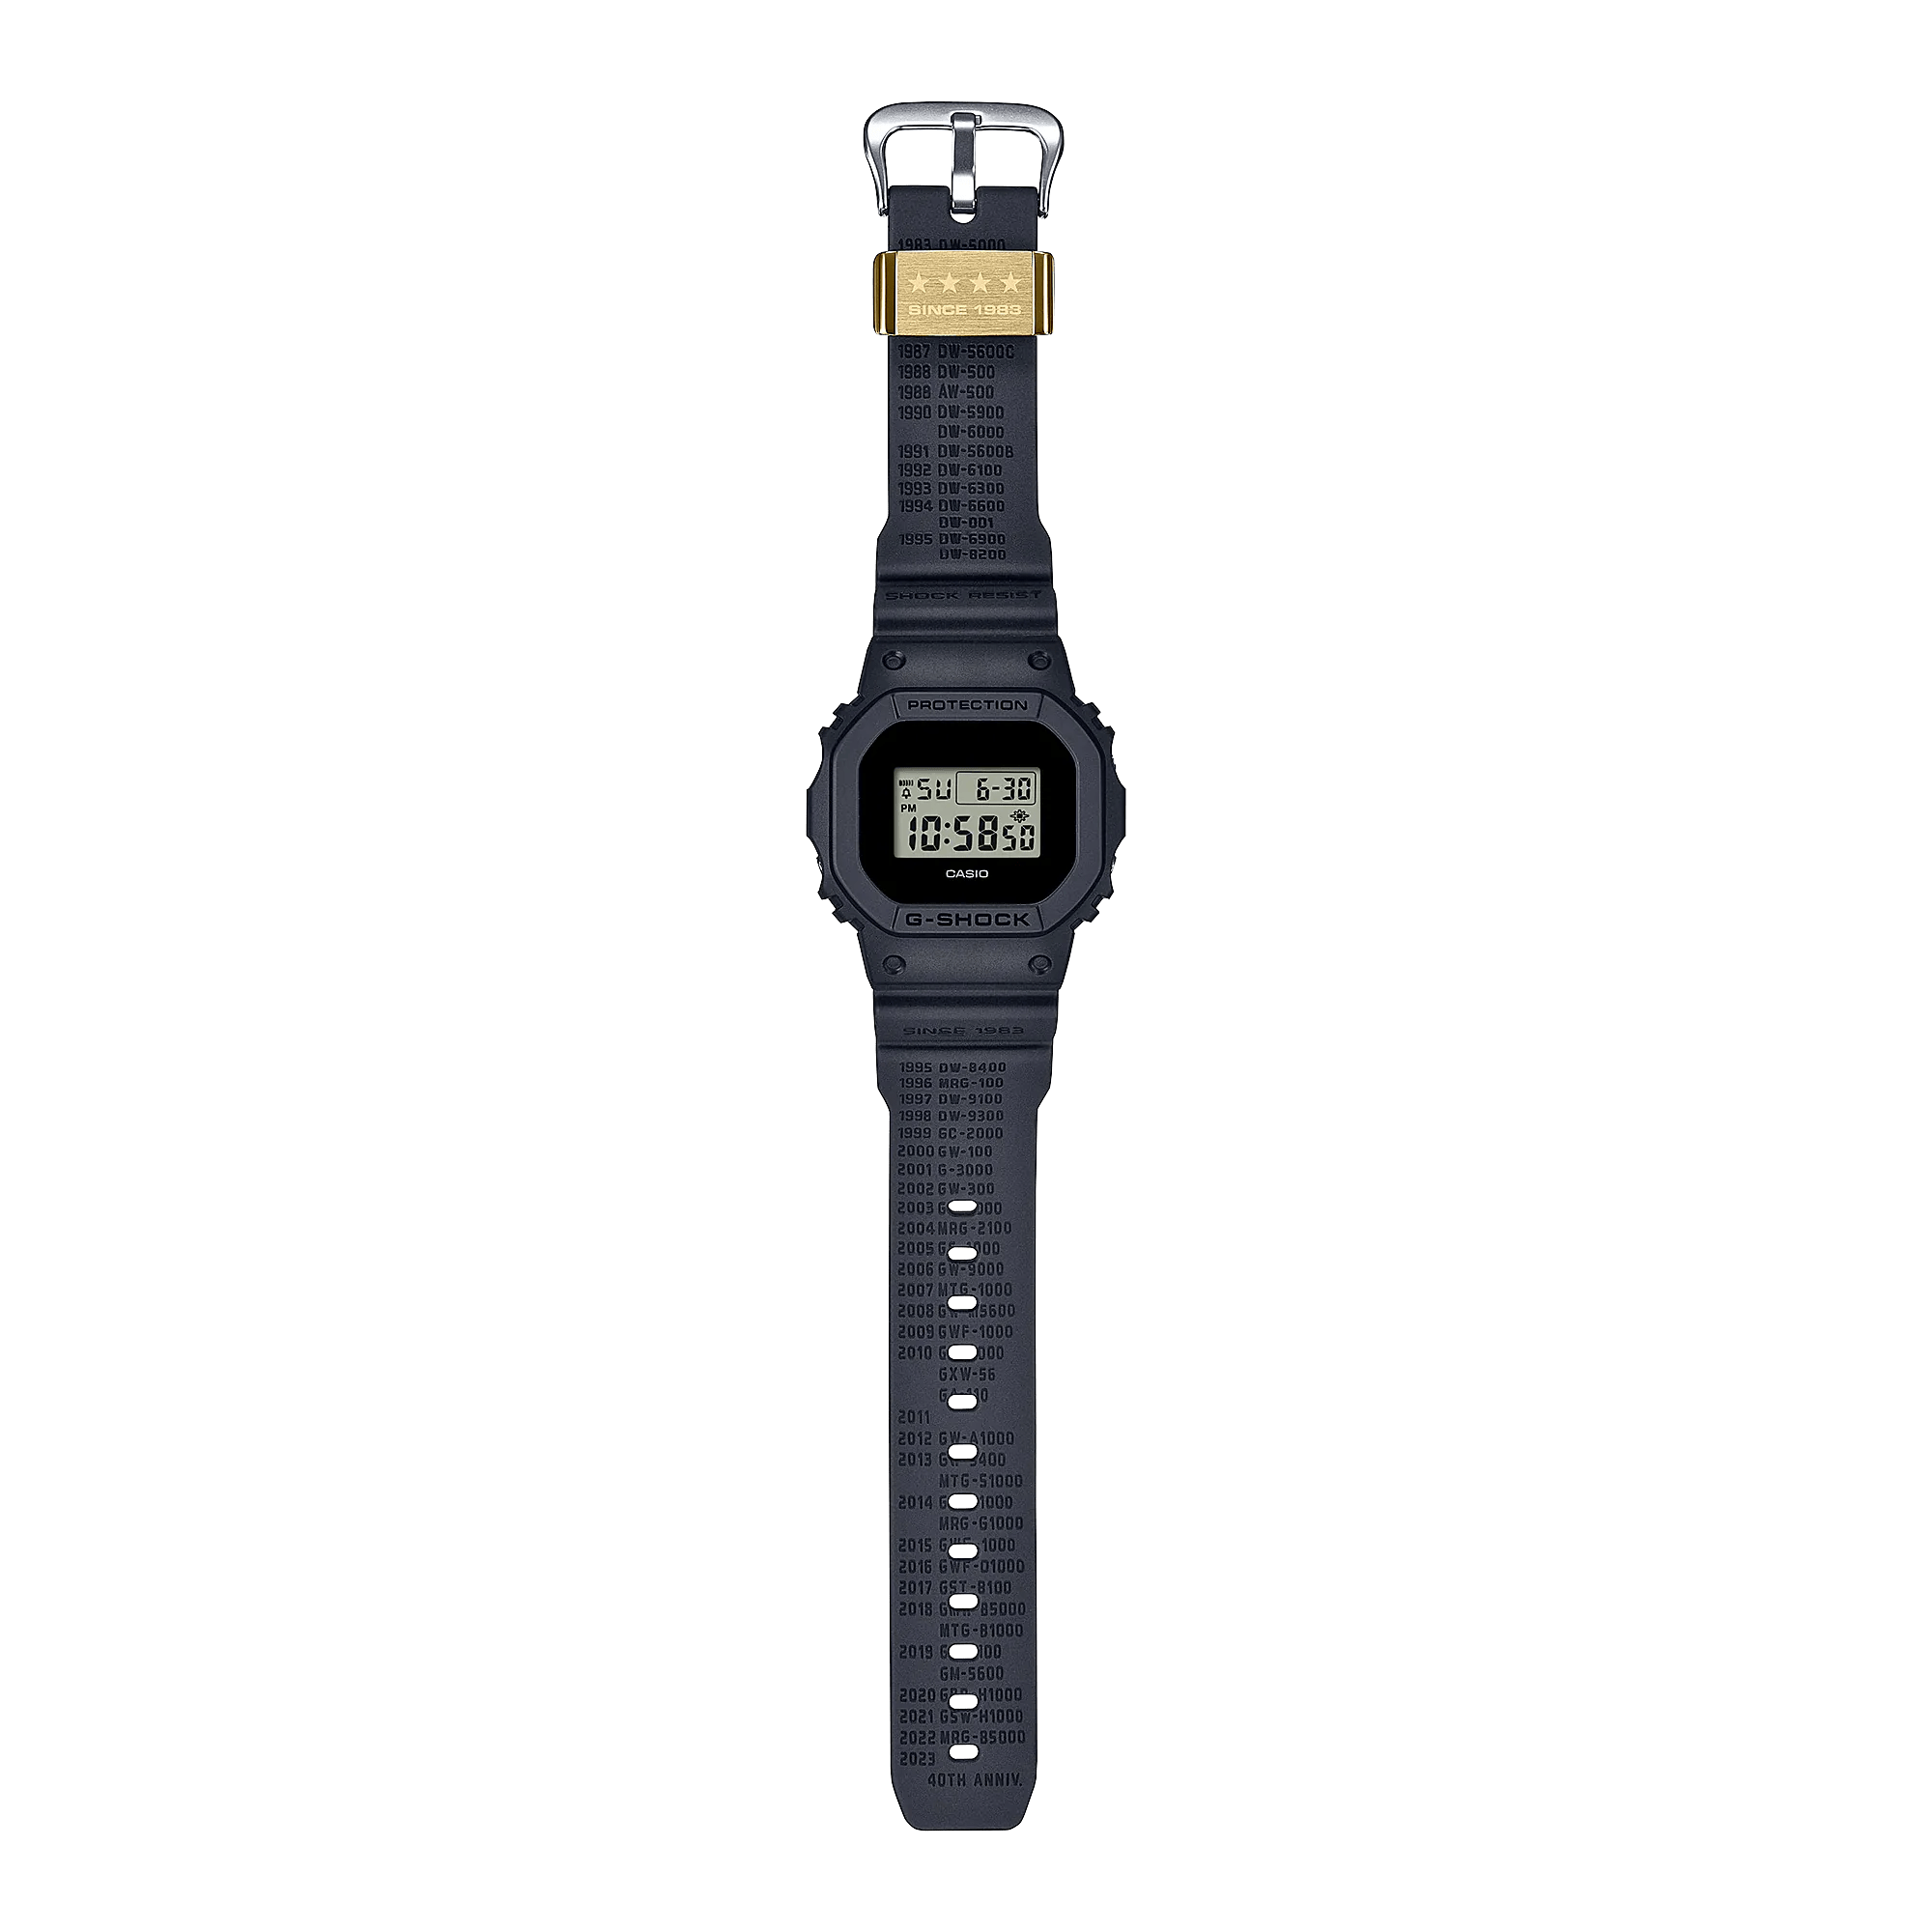 Black Digital Watches by G-SHOCK: Black Watches for Men & Women